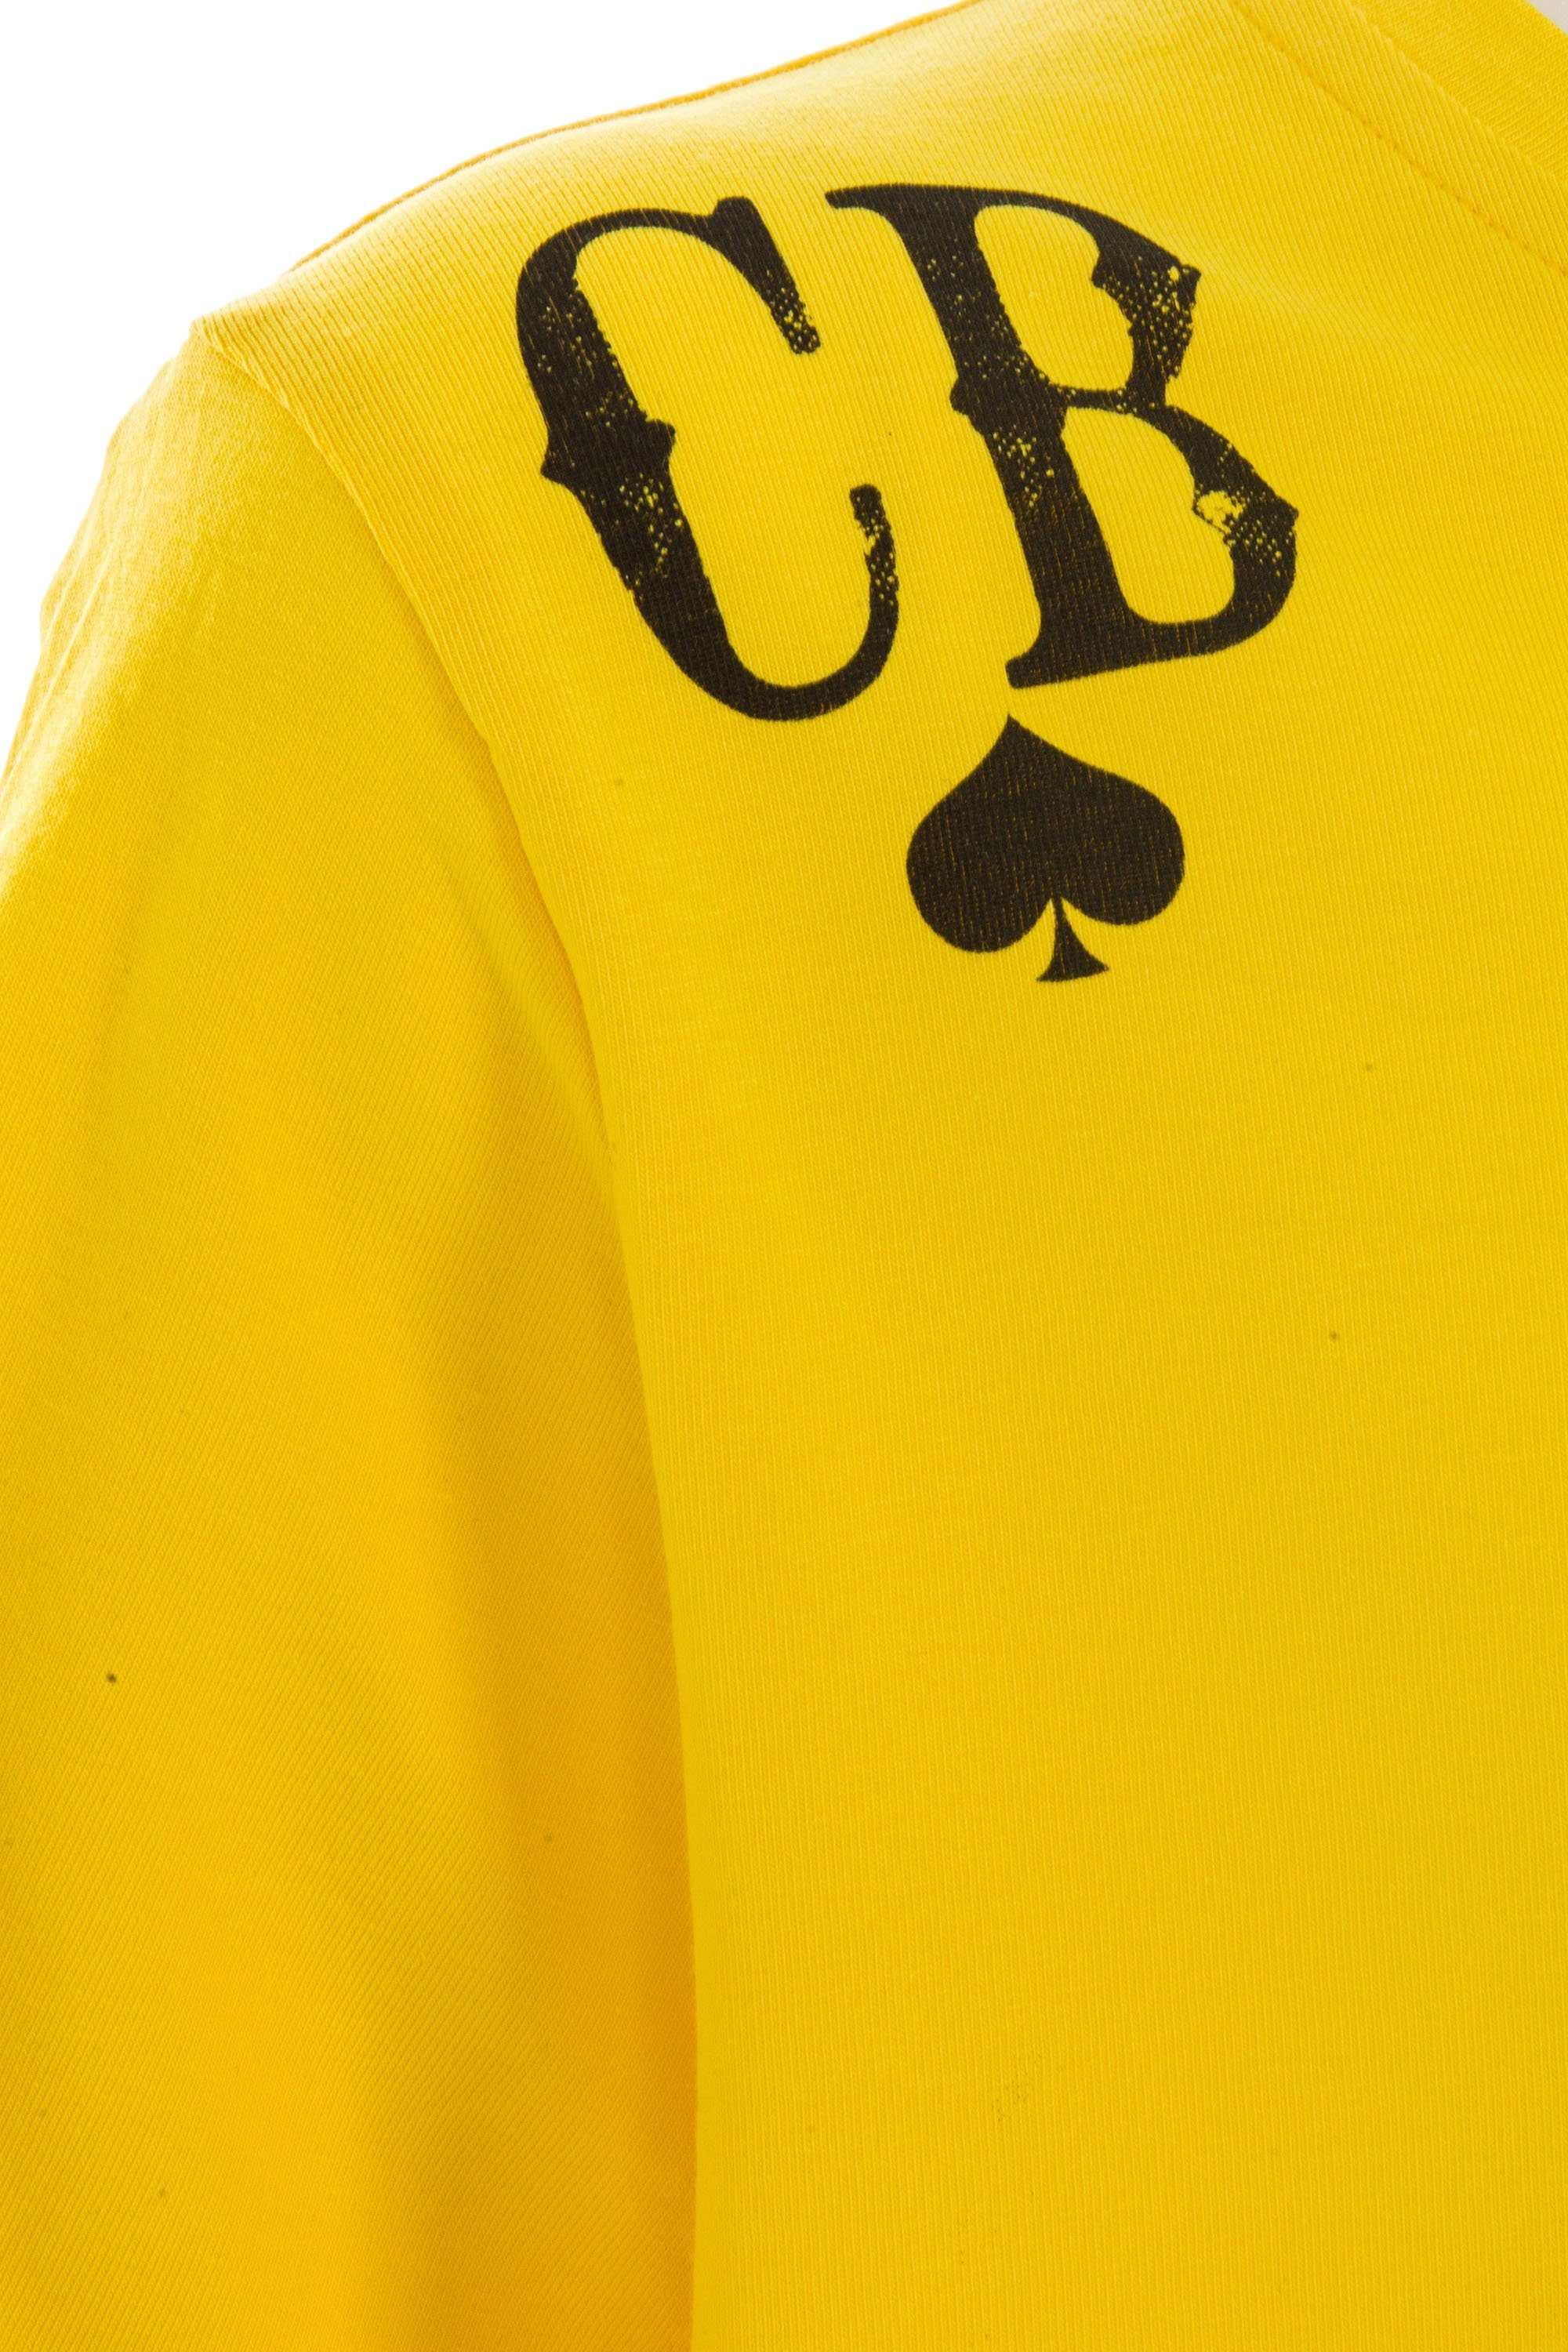 coolem Cipo mit & Print gelb-schwarz T-Shirt Baxx